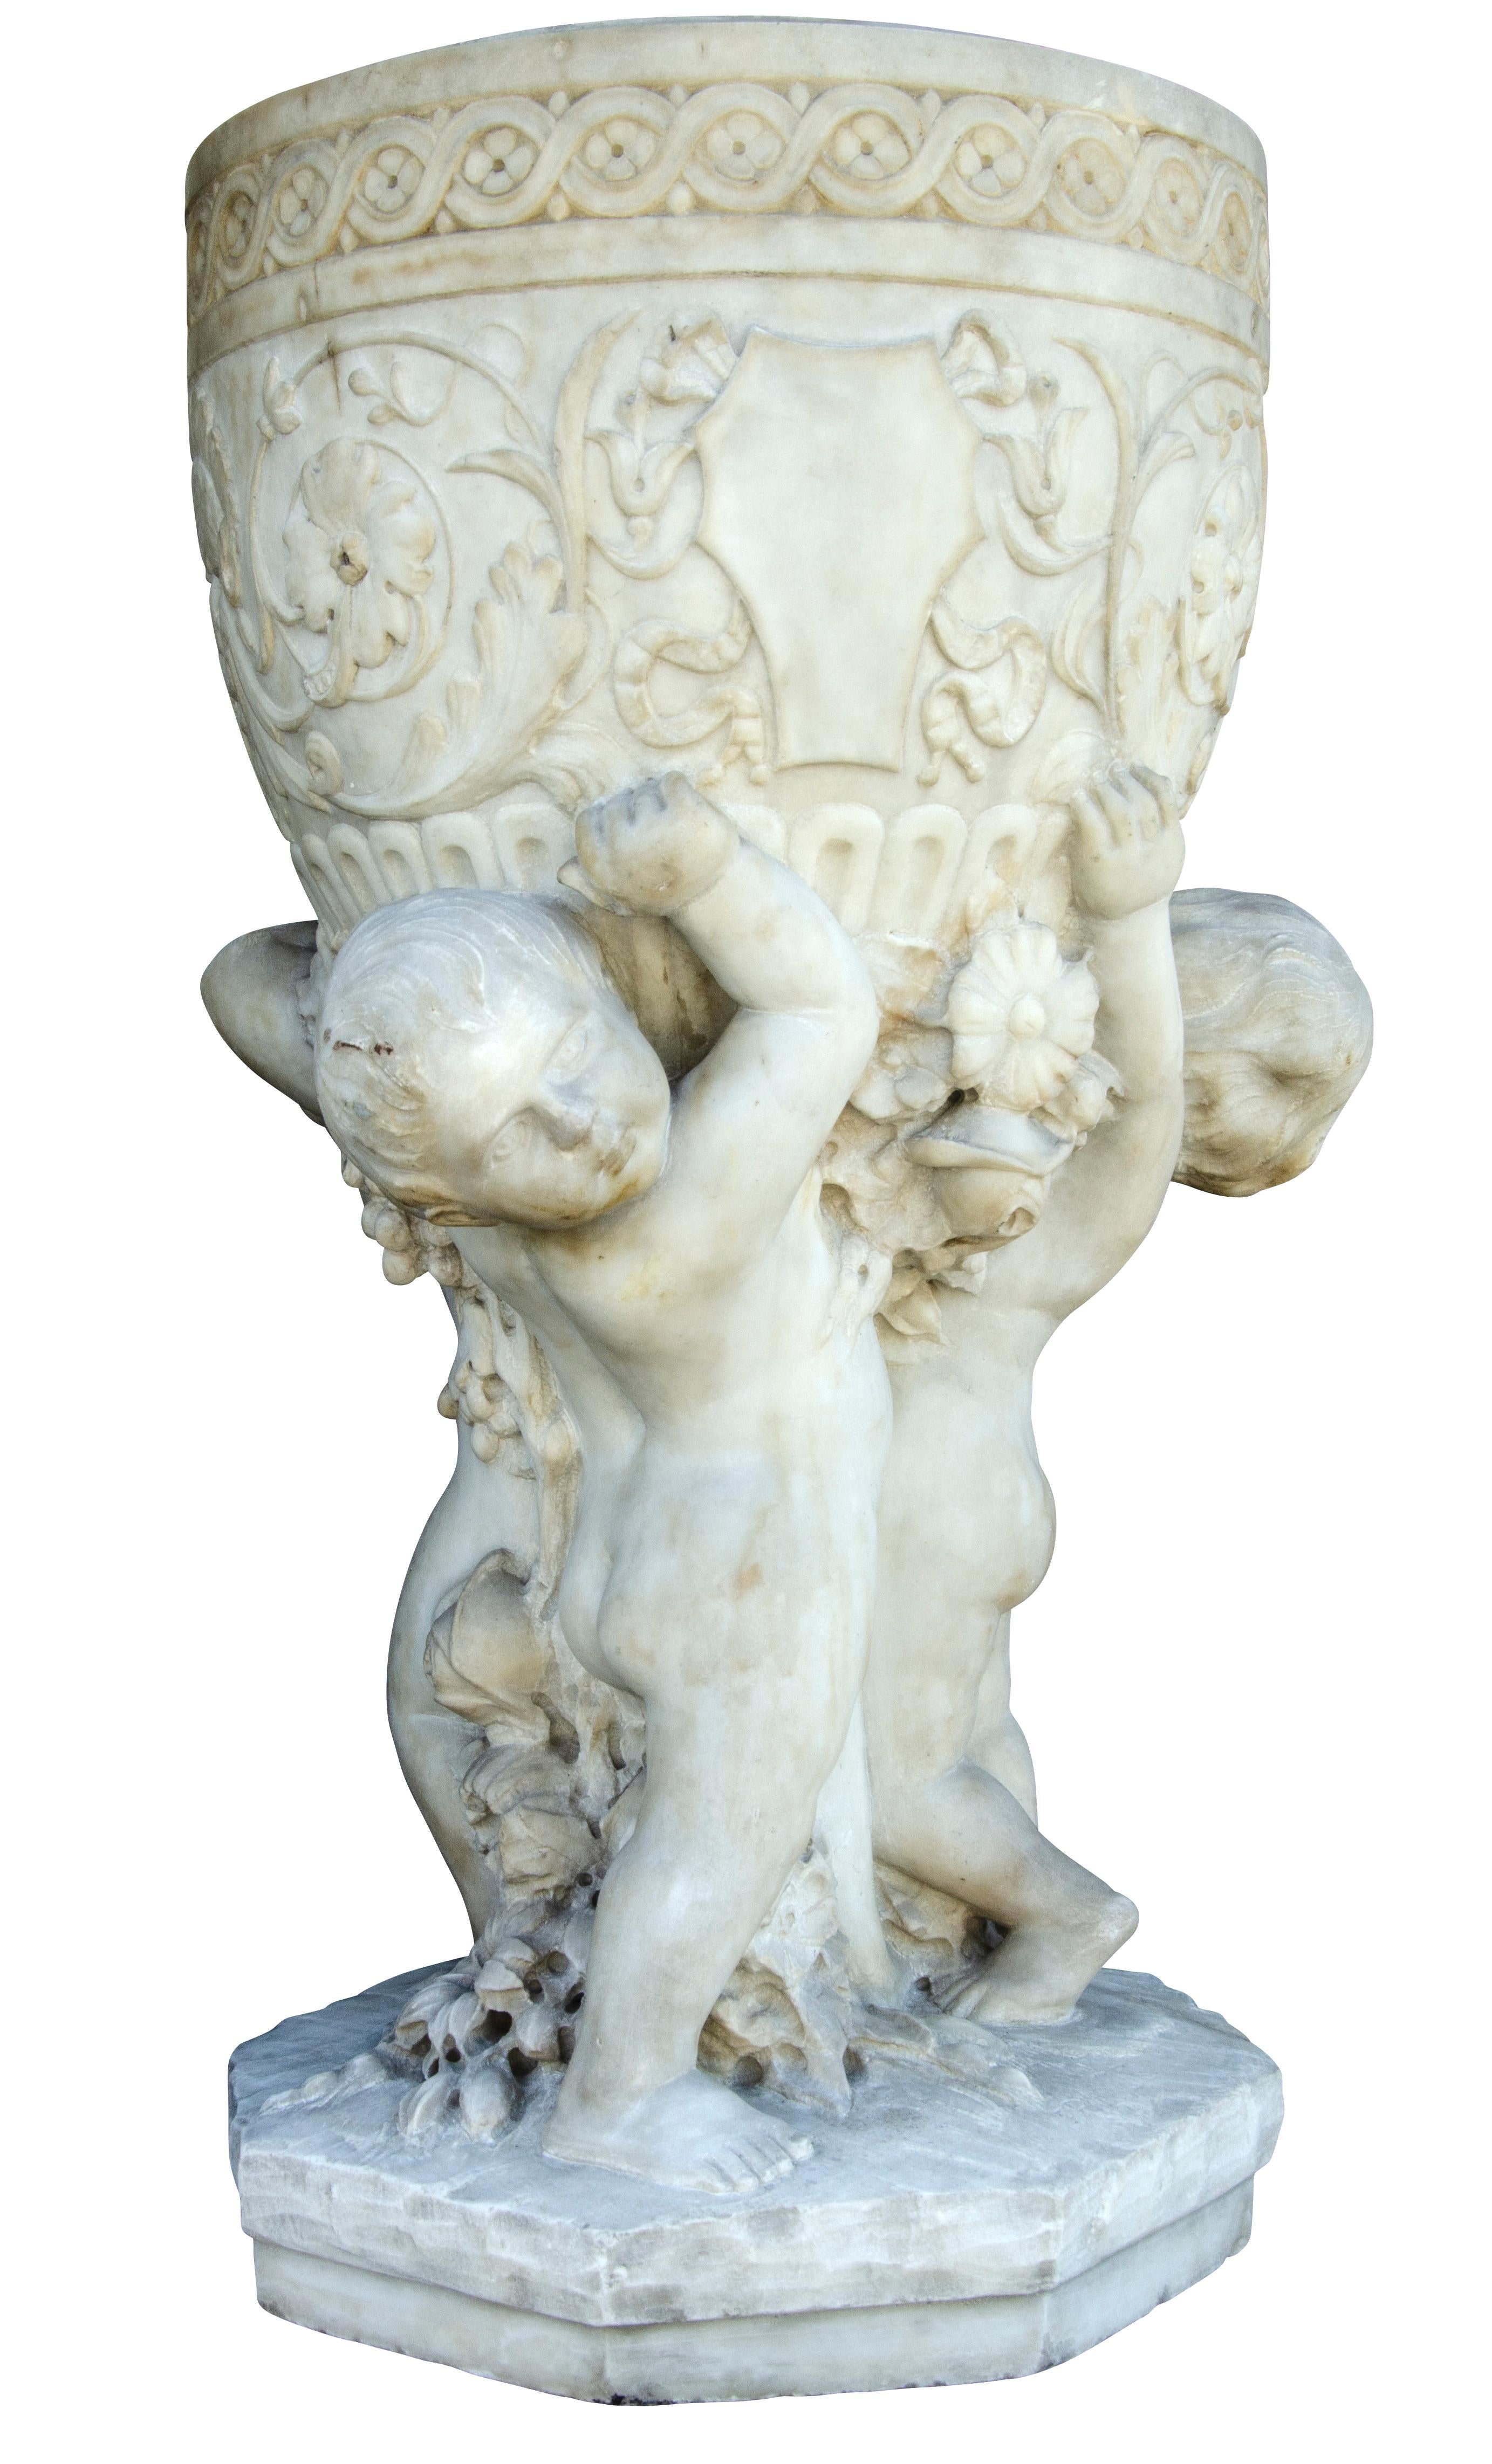 Neoclassical Revival Italian Carrara Marble Garden Sculpture For Sale